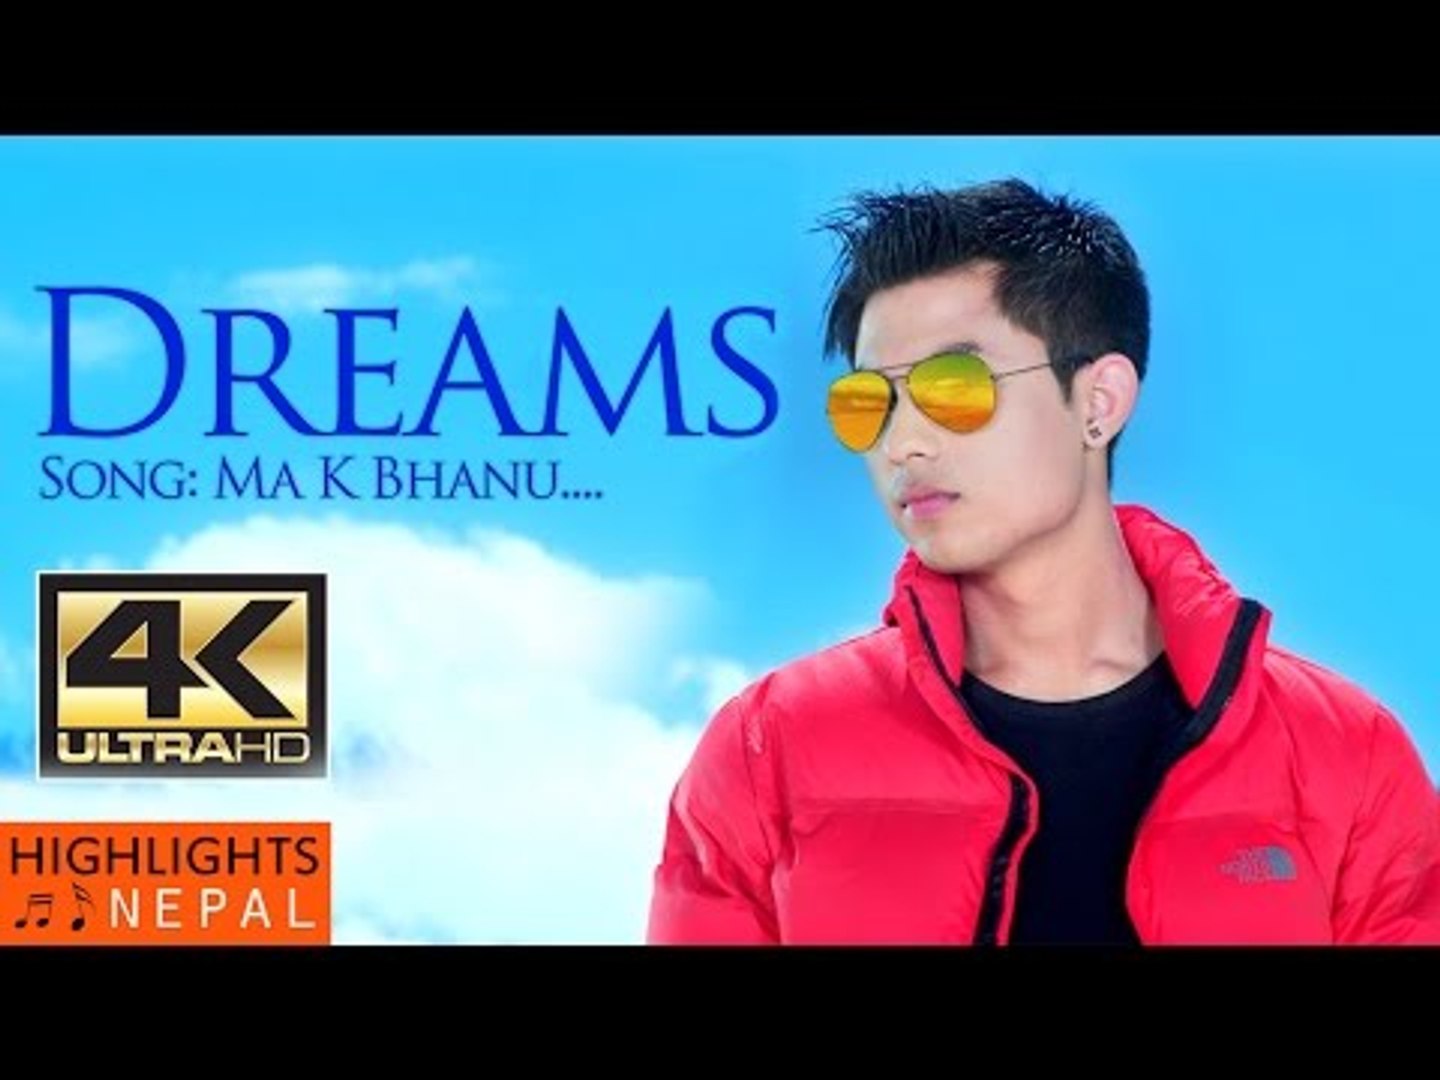 Nepali Movie Dreams Full Movie